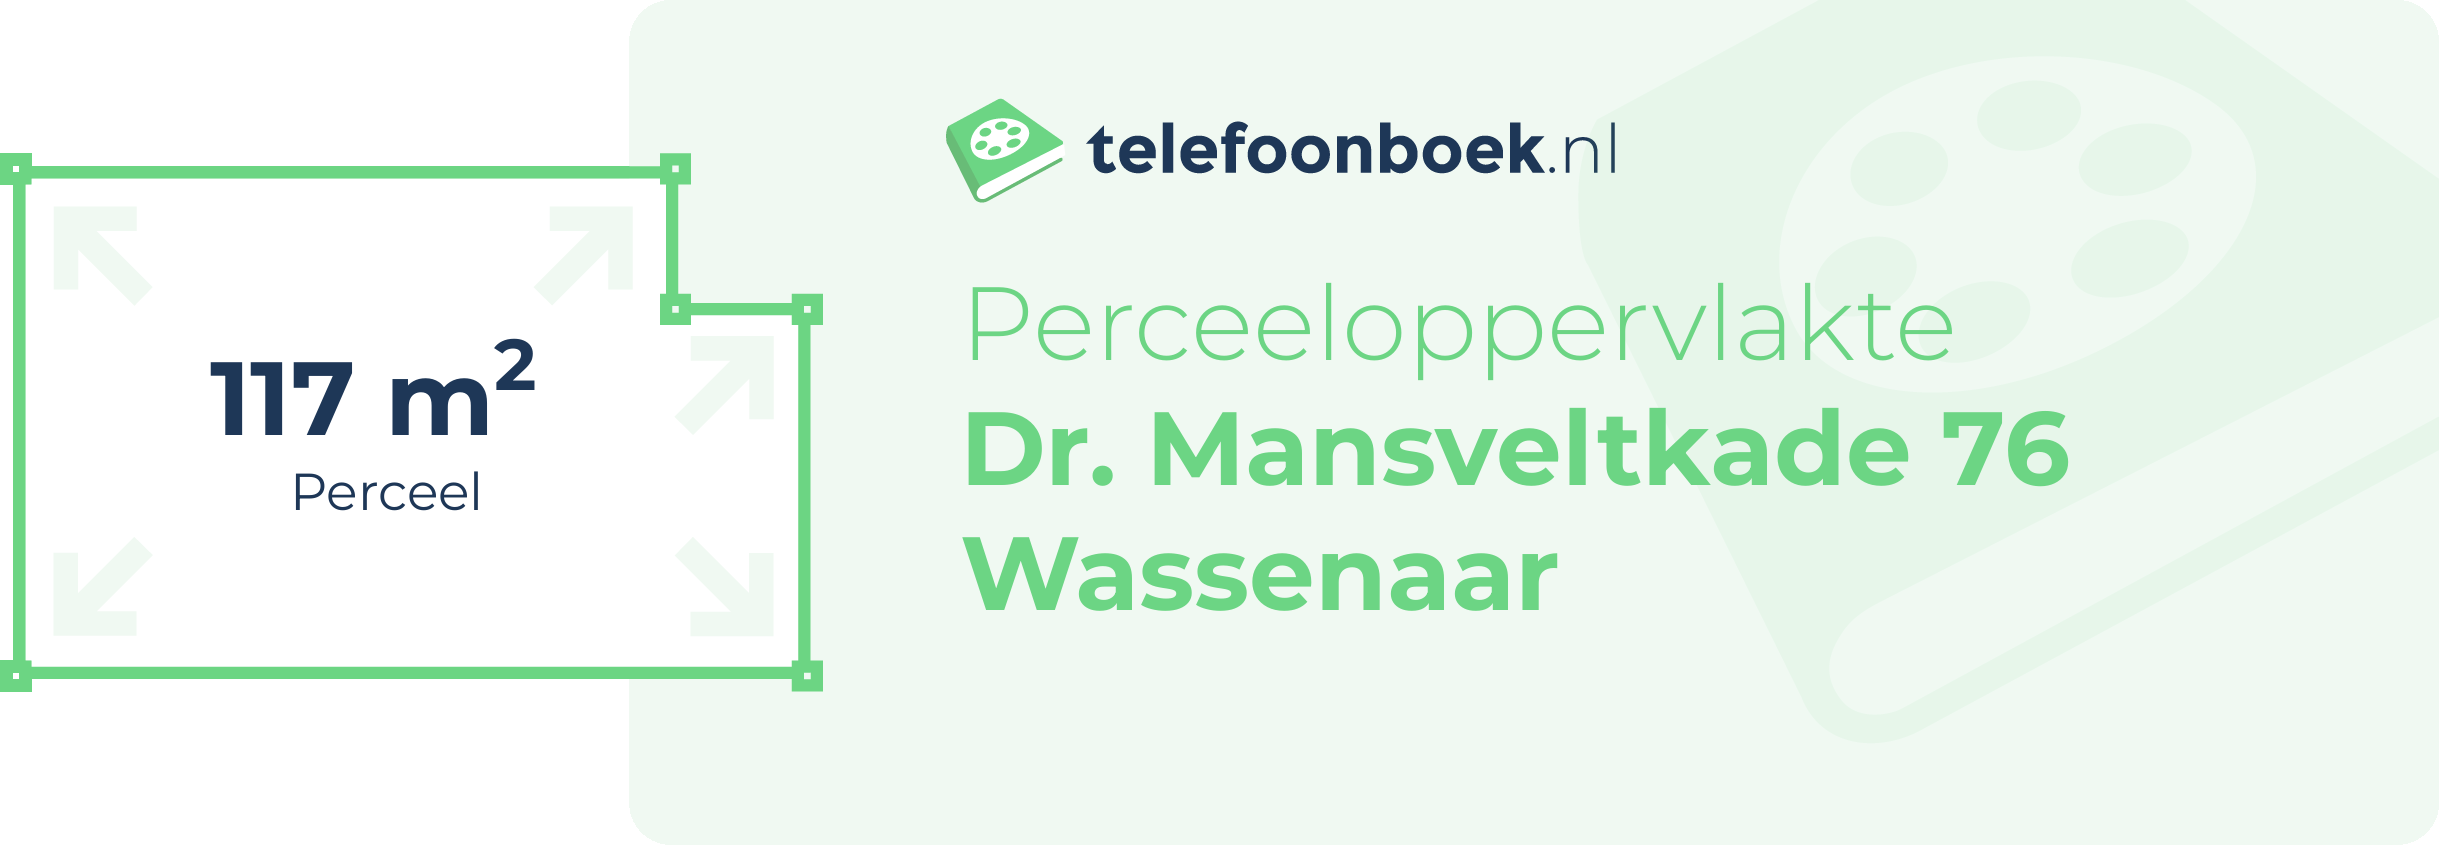 Perceeloppervlakte Dr. Mansveltkade 76 Wassenaar